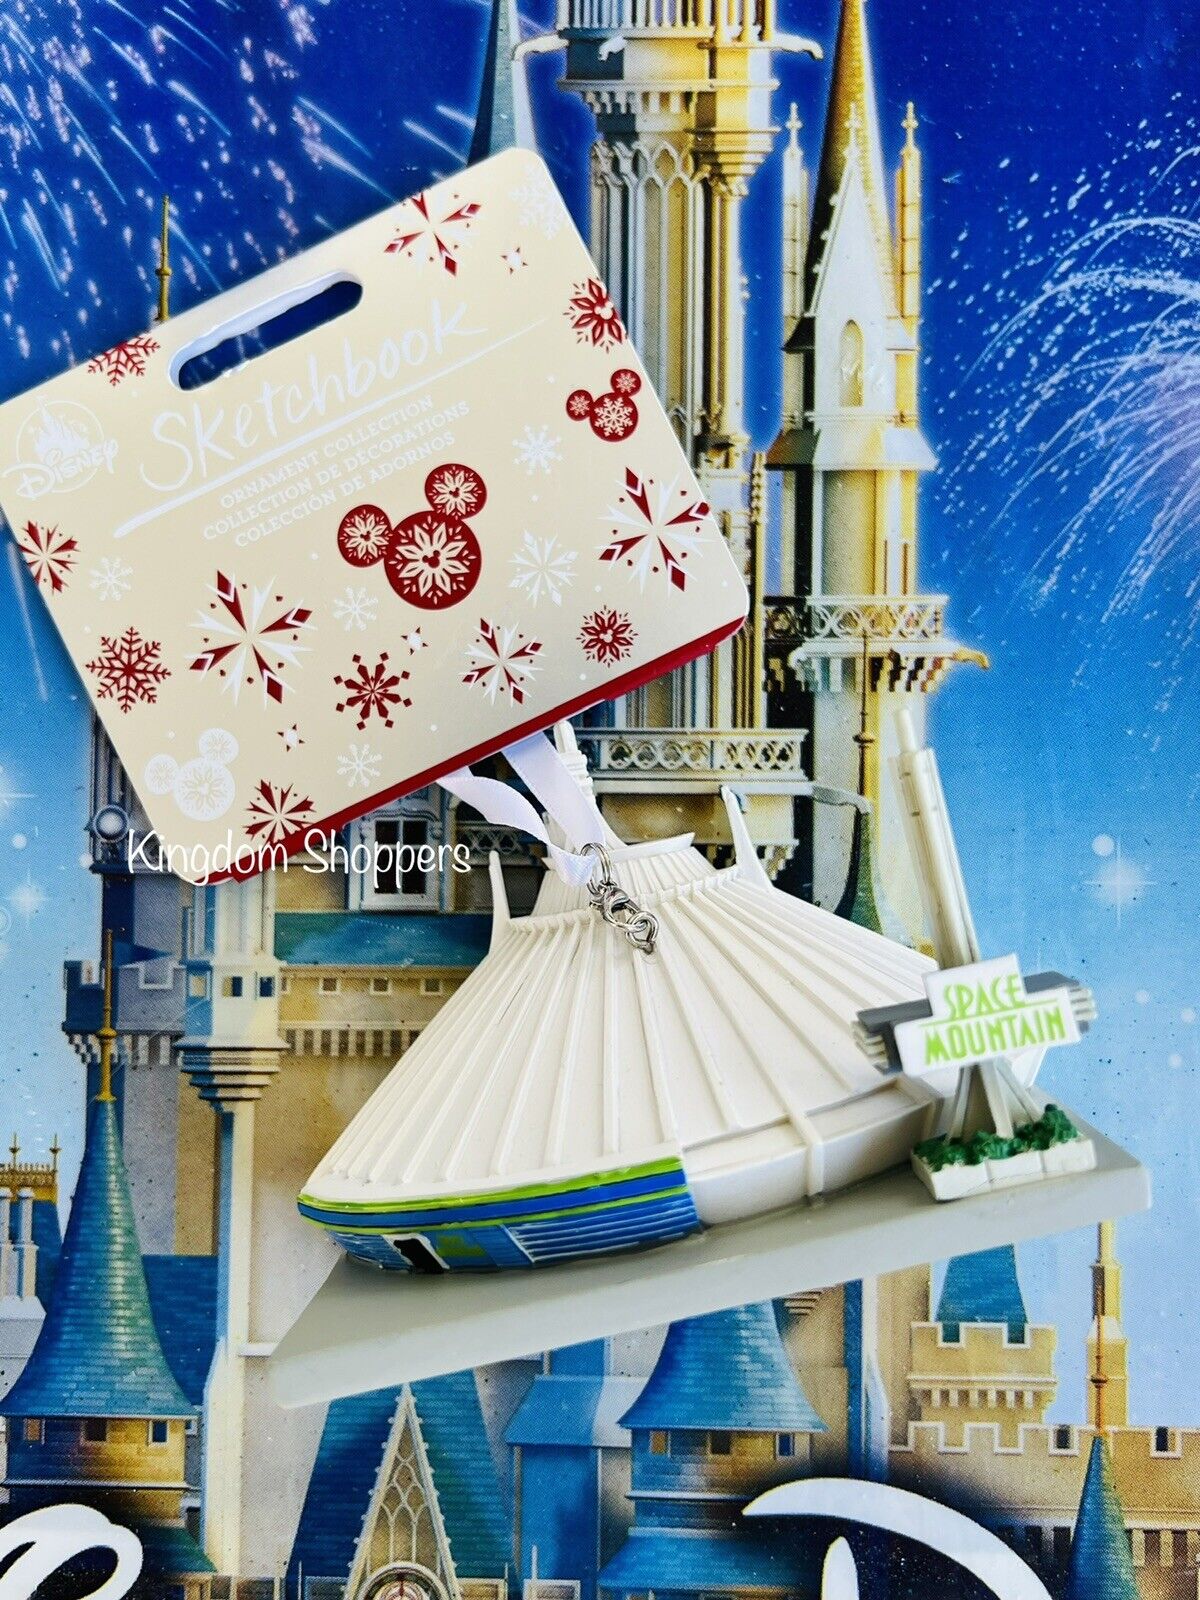 2022 Disney Parks Magic Kingdom Space Mountain Miniature Christmas Ornament